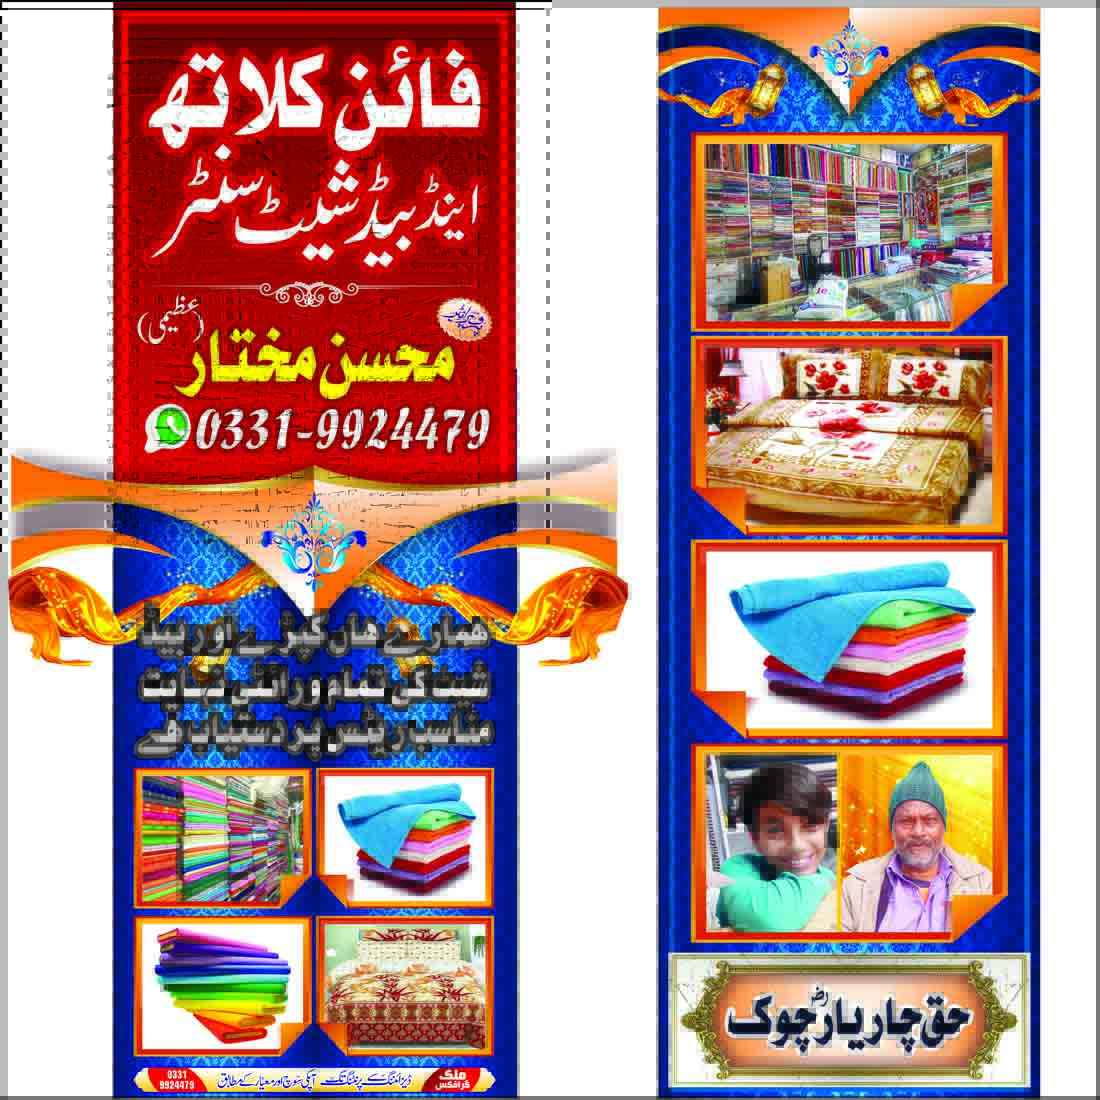 standee portrait graphic design Urdu sample cover image.